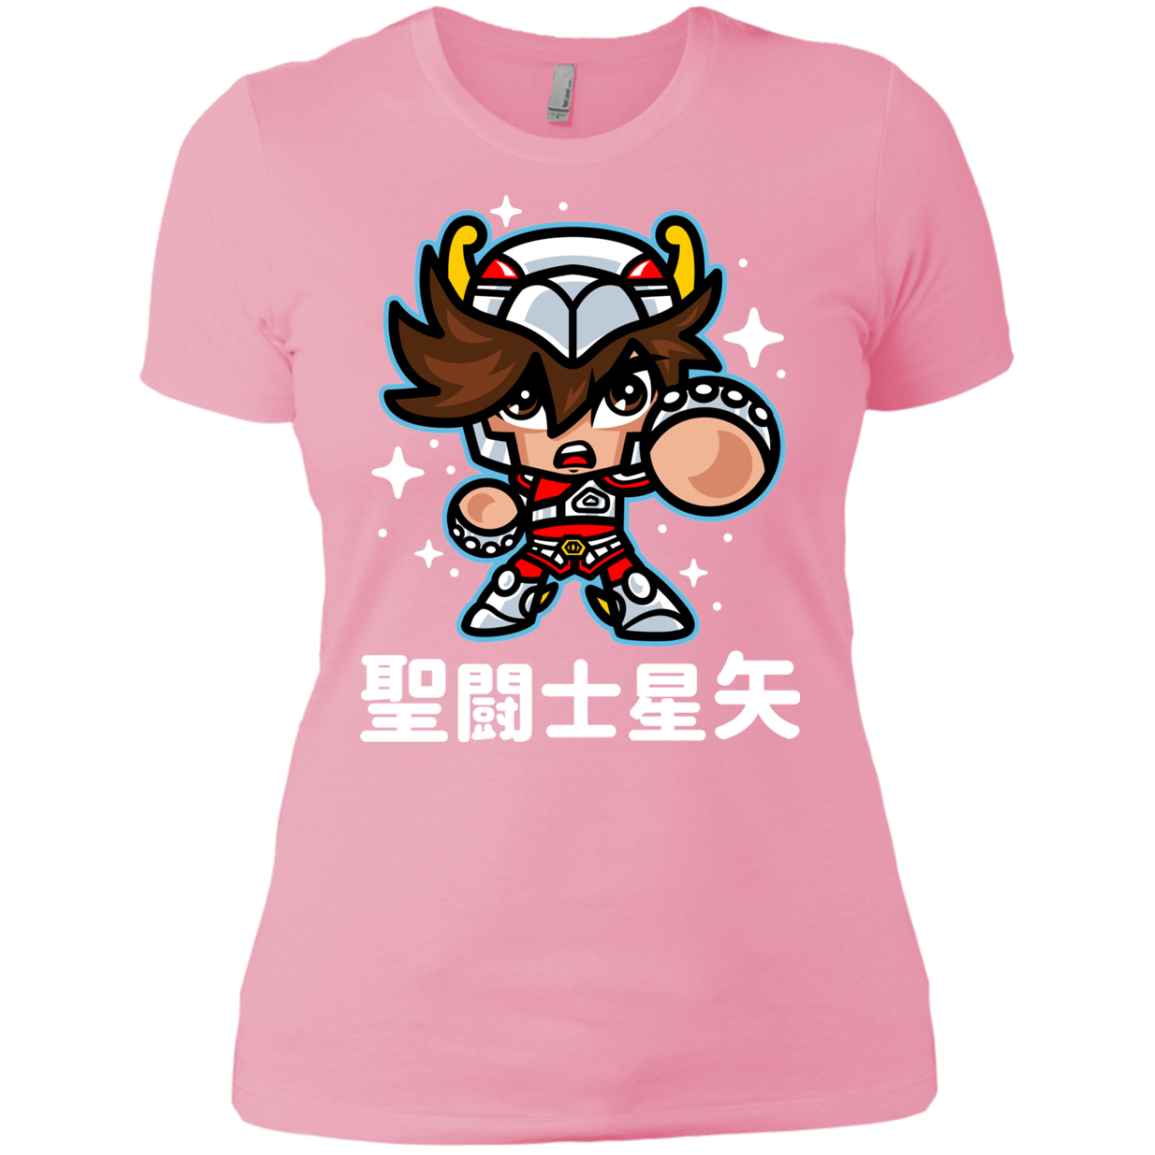 ChibiPegasus Women's Premium T-Shirt